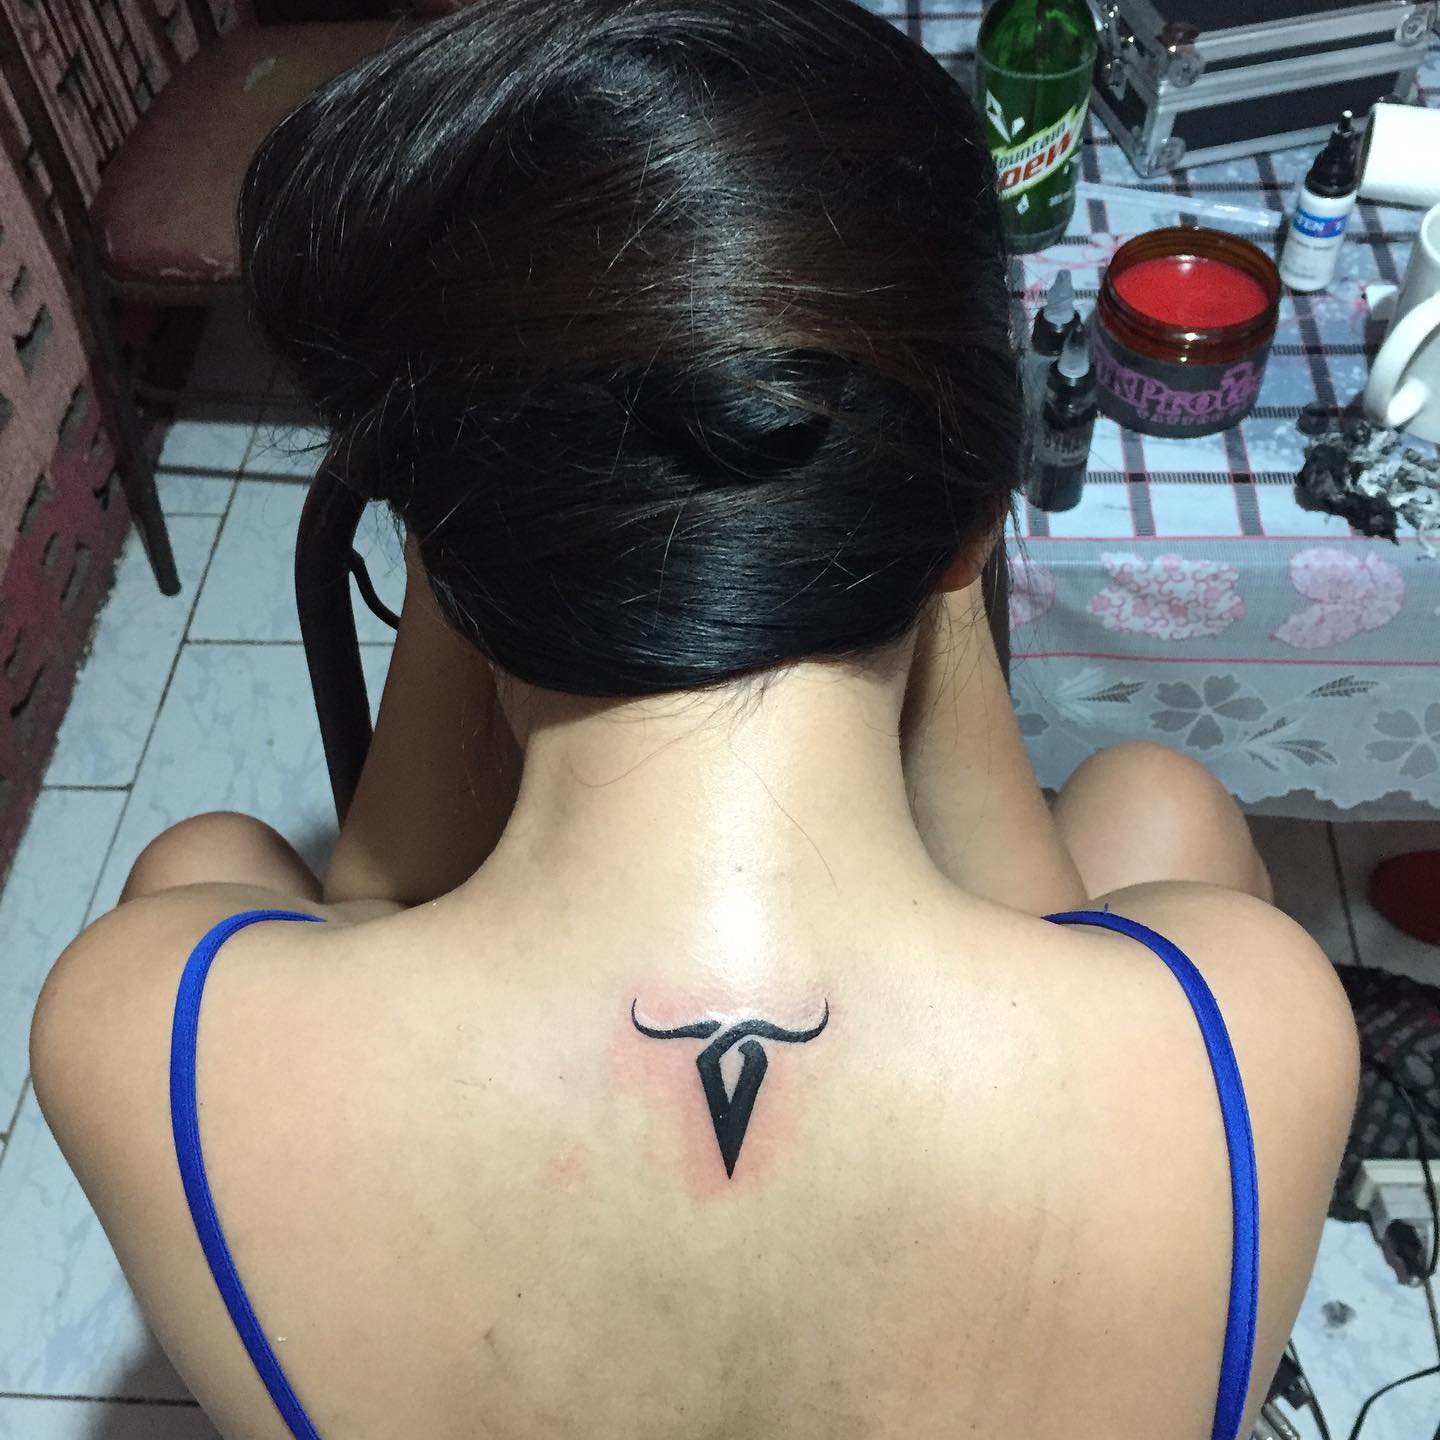 Capricorn symbol tattooed on the upper back